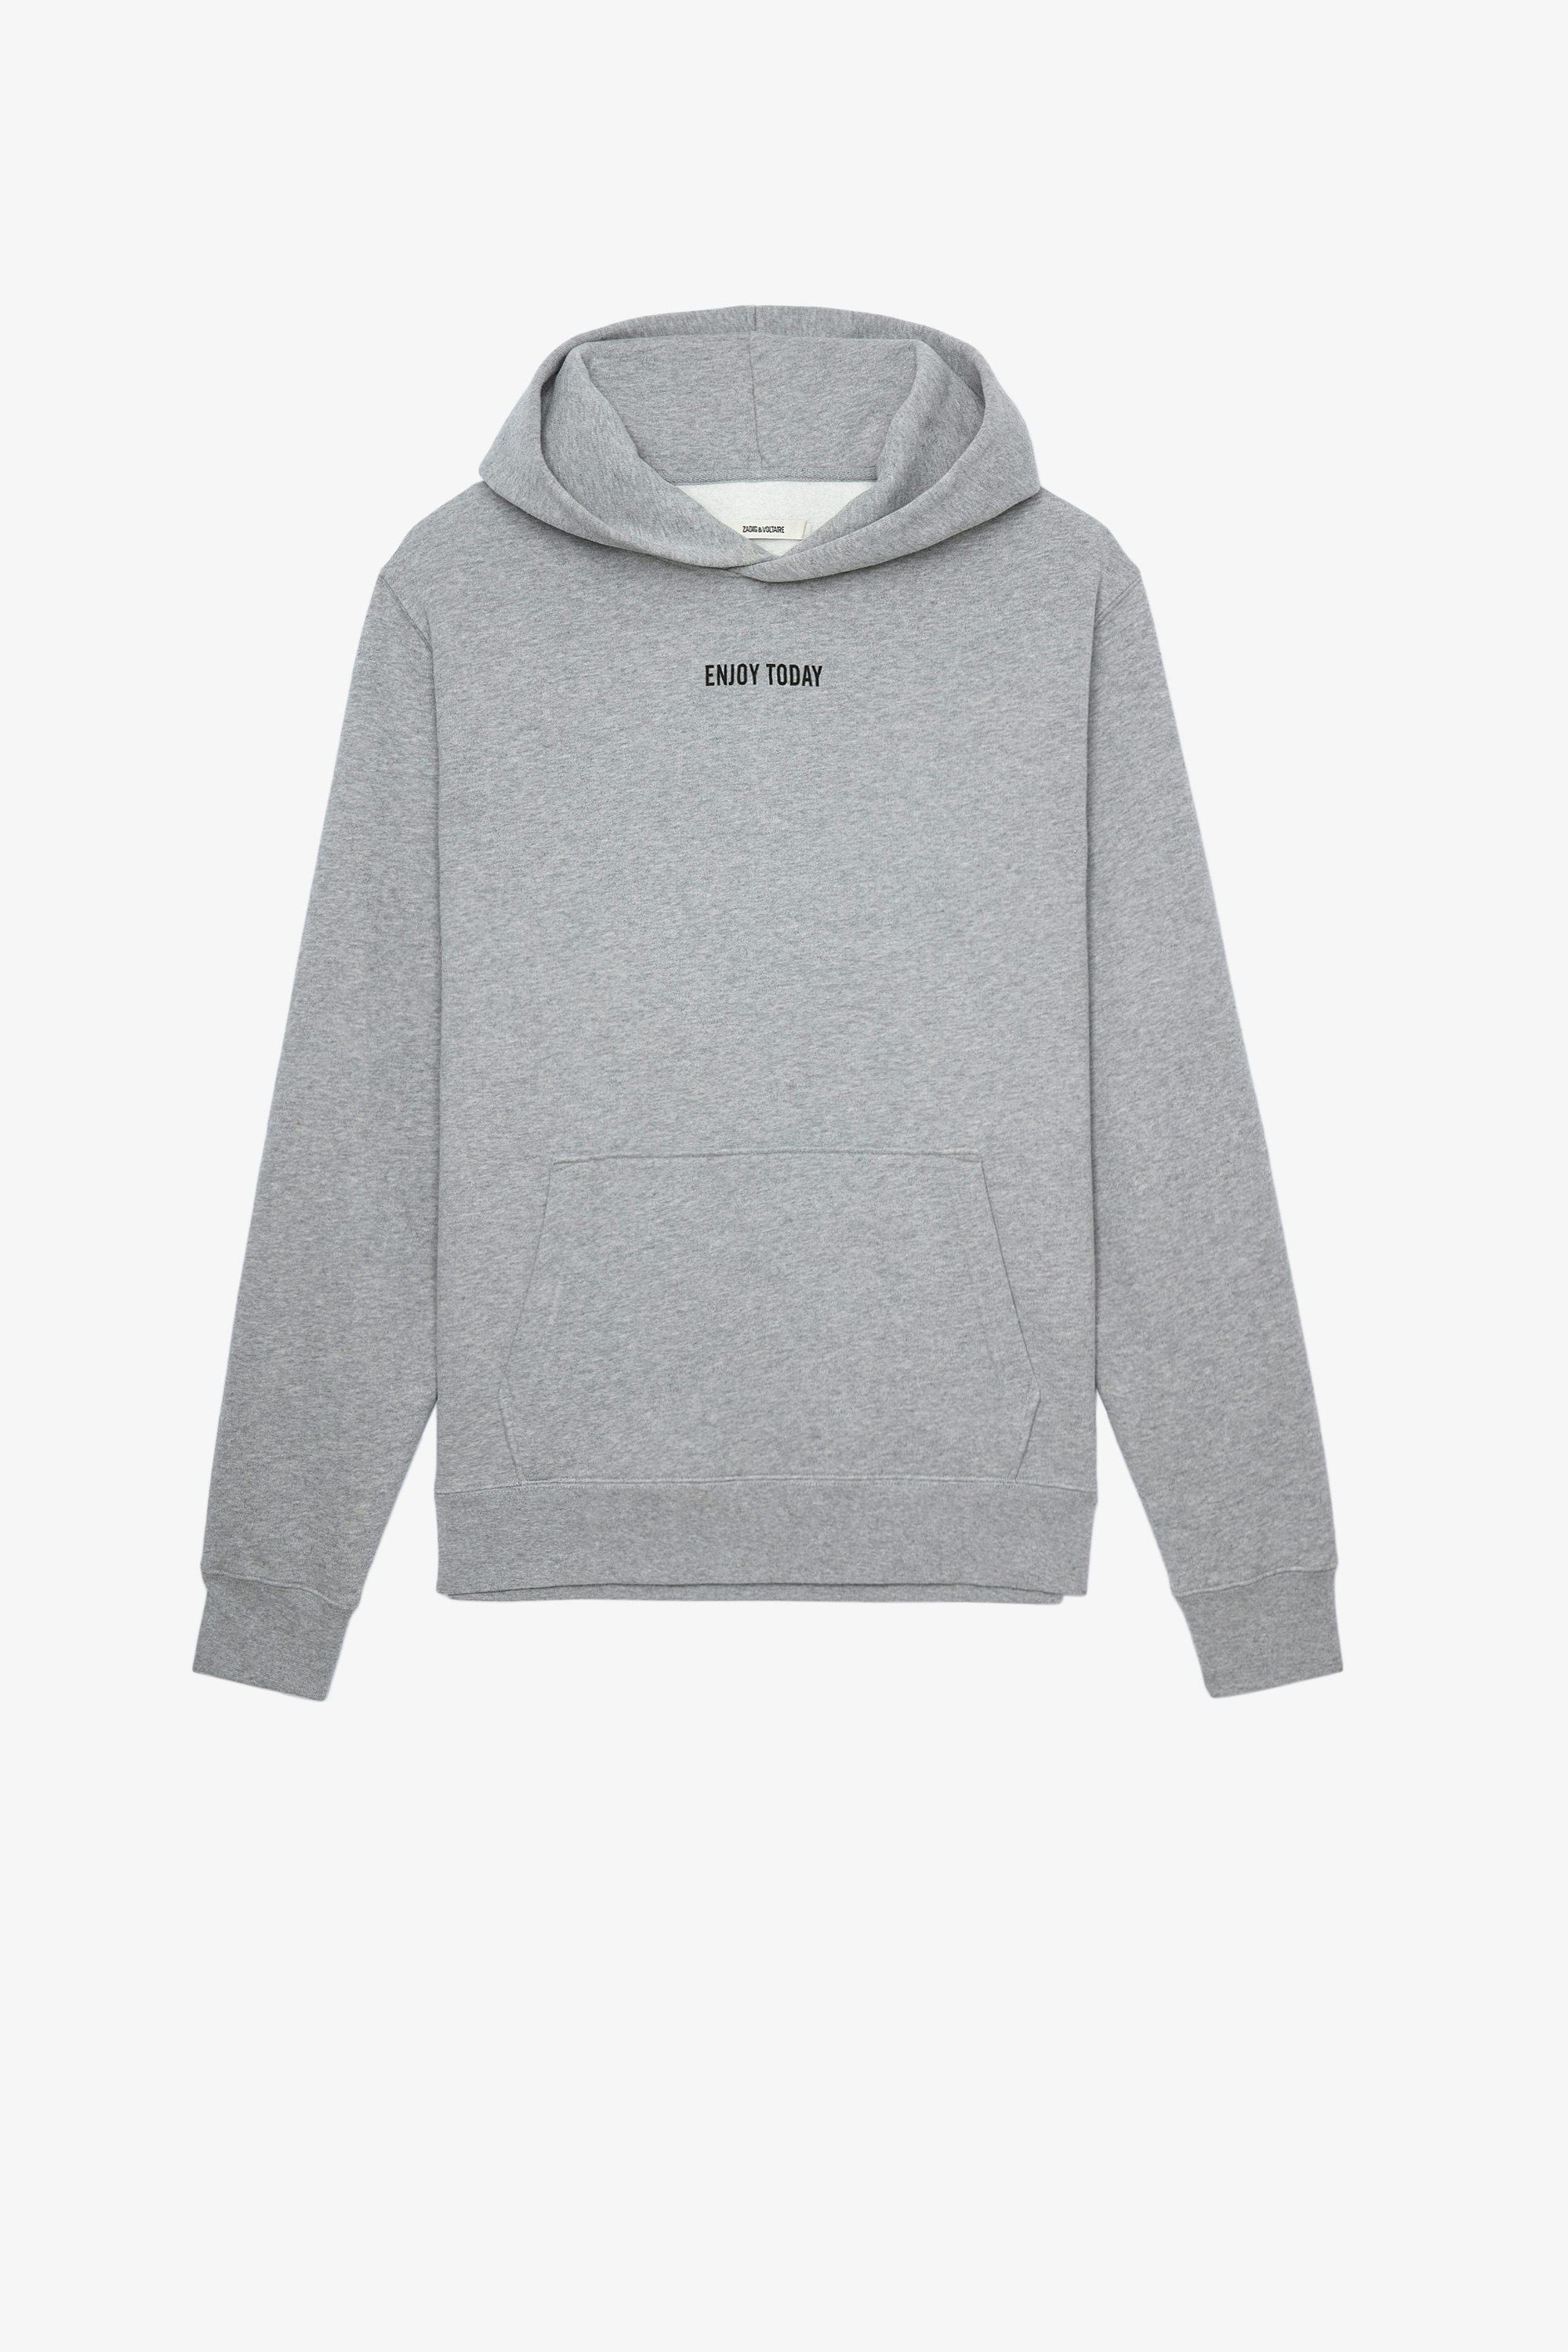 Sanchi フォトプリント スウェット Men’s light grey cotton sweatshirt with photoprint on back